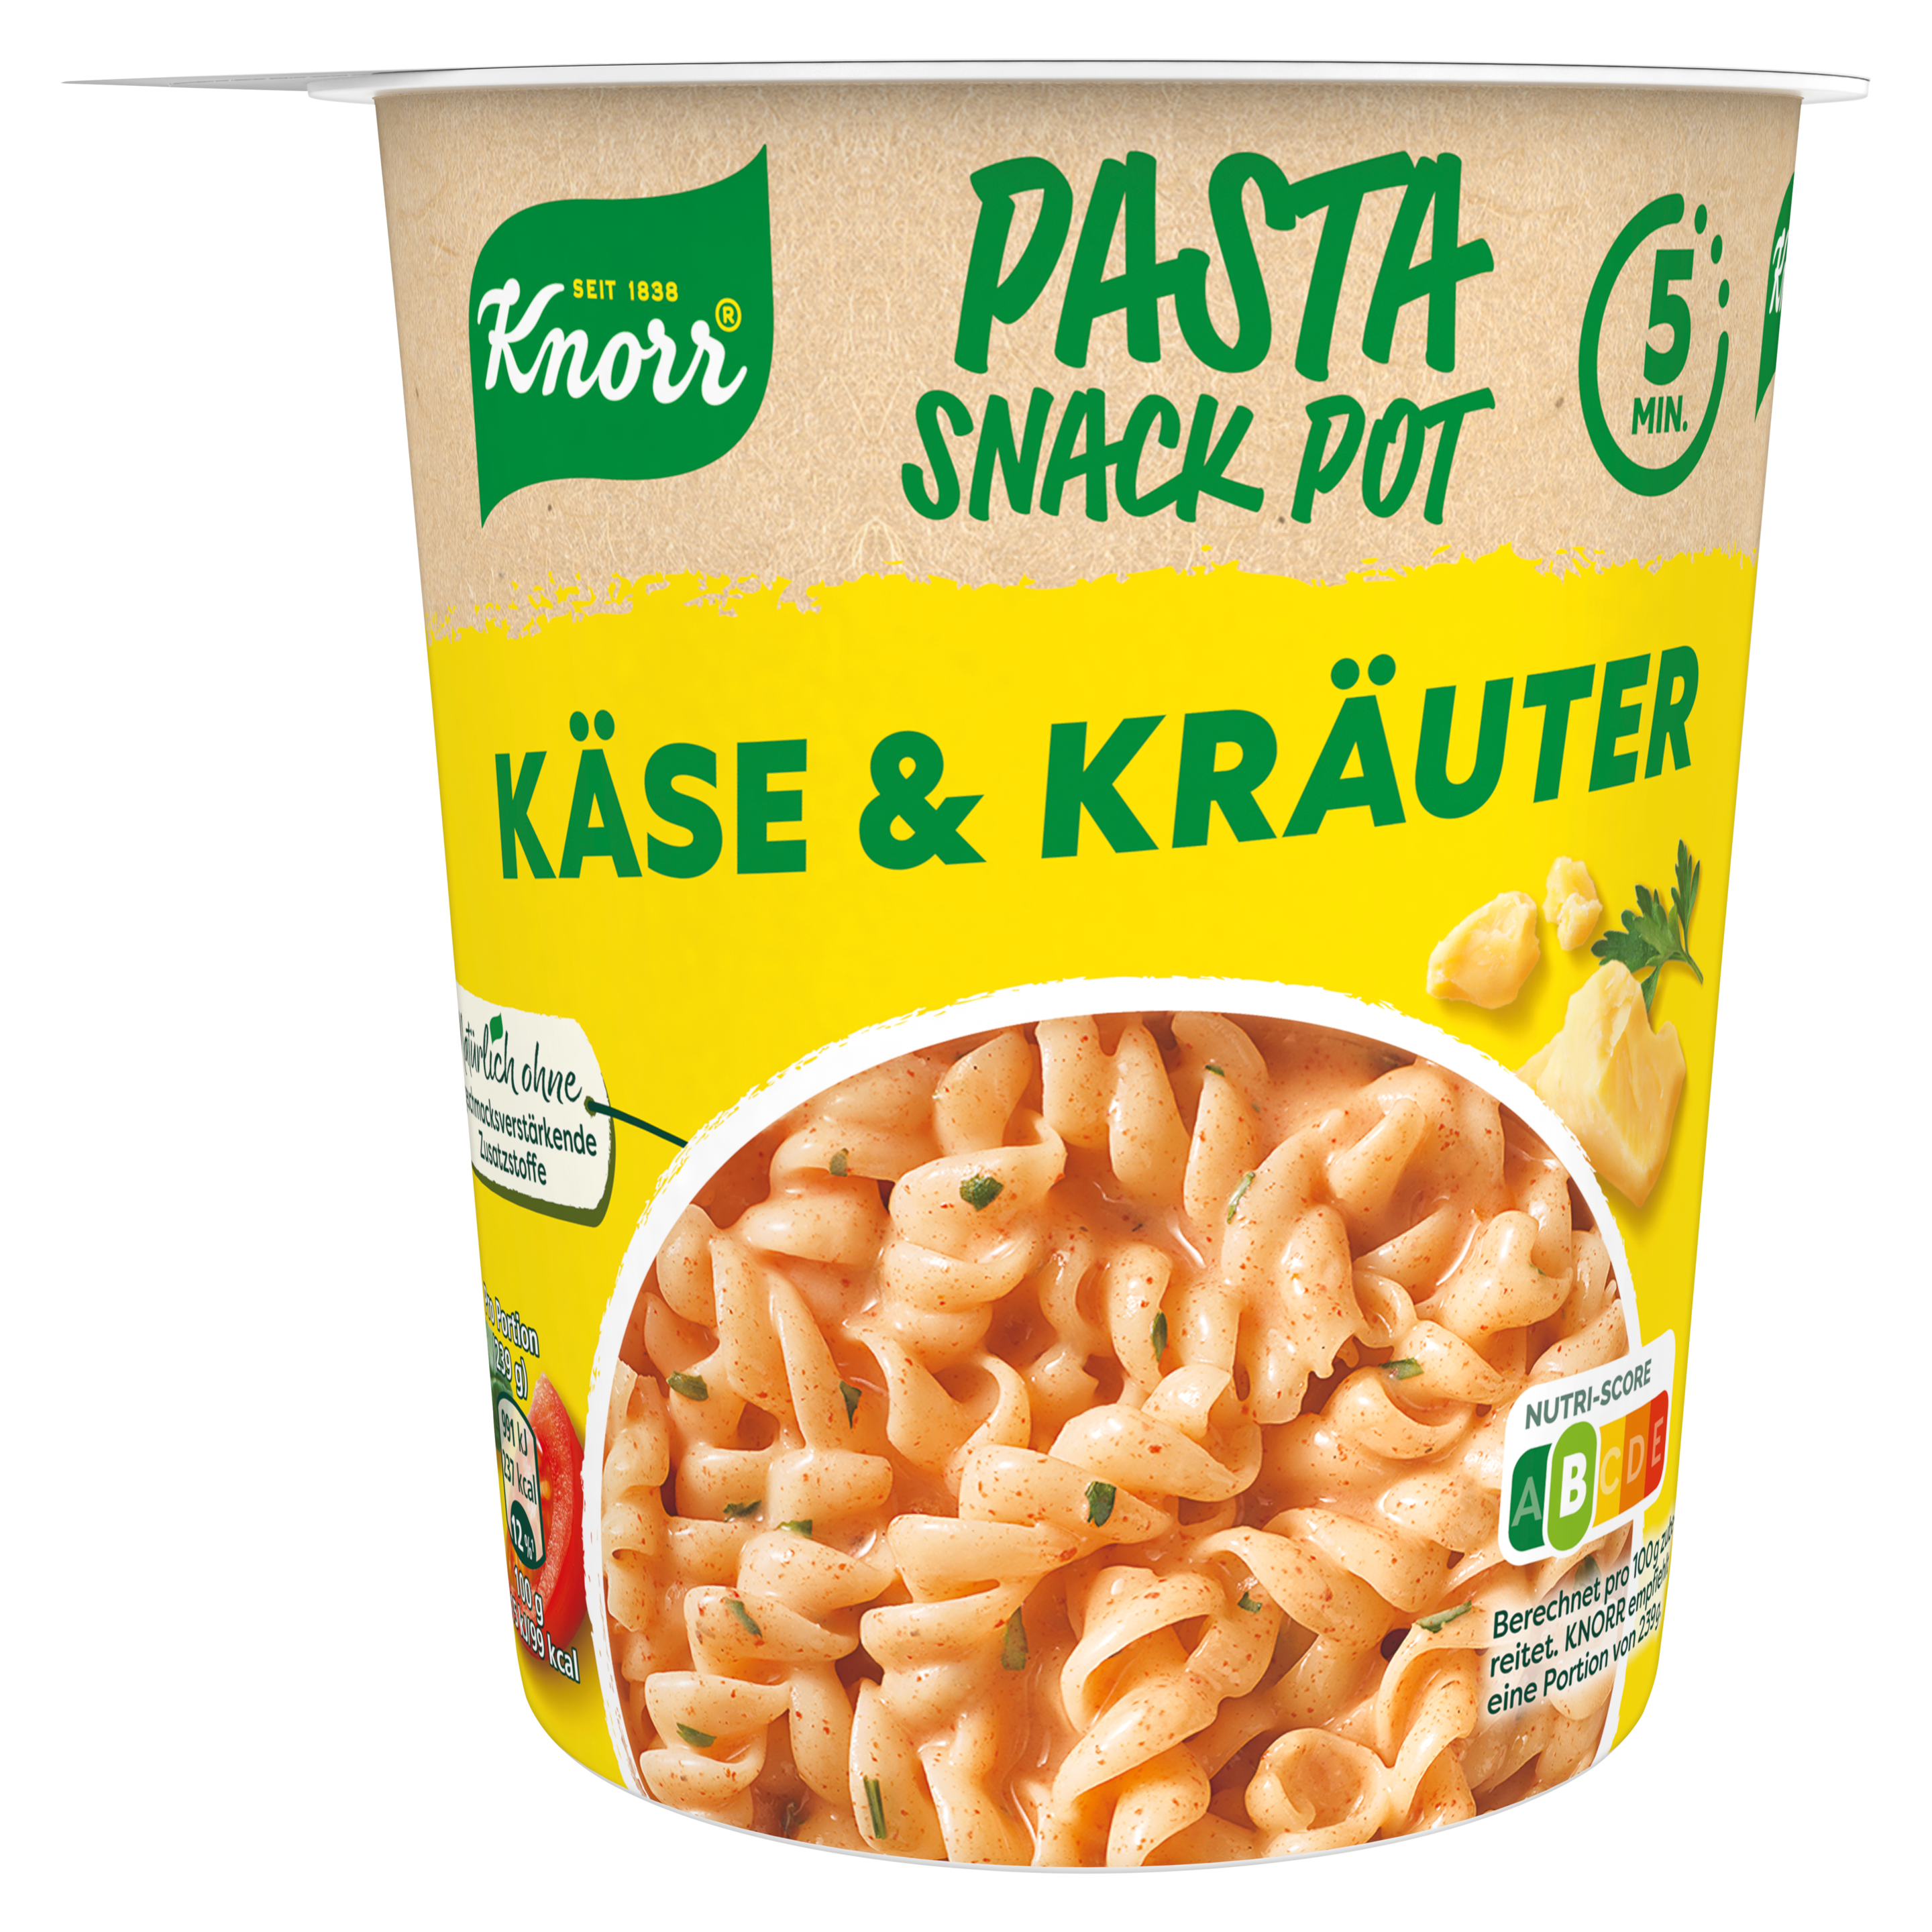 Knorr Pasta Snack Pot Käse & Kräuter 59g Becher